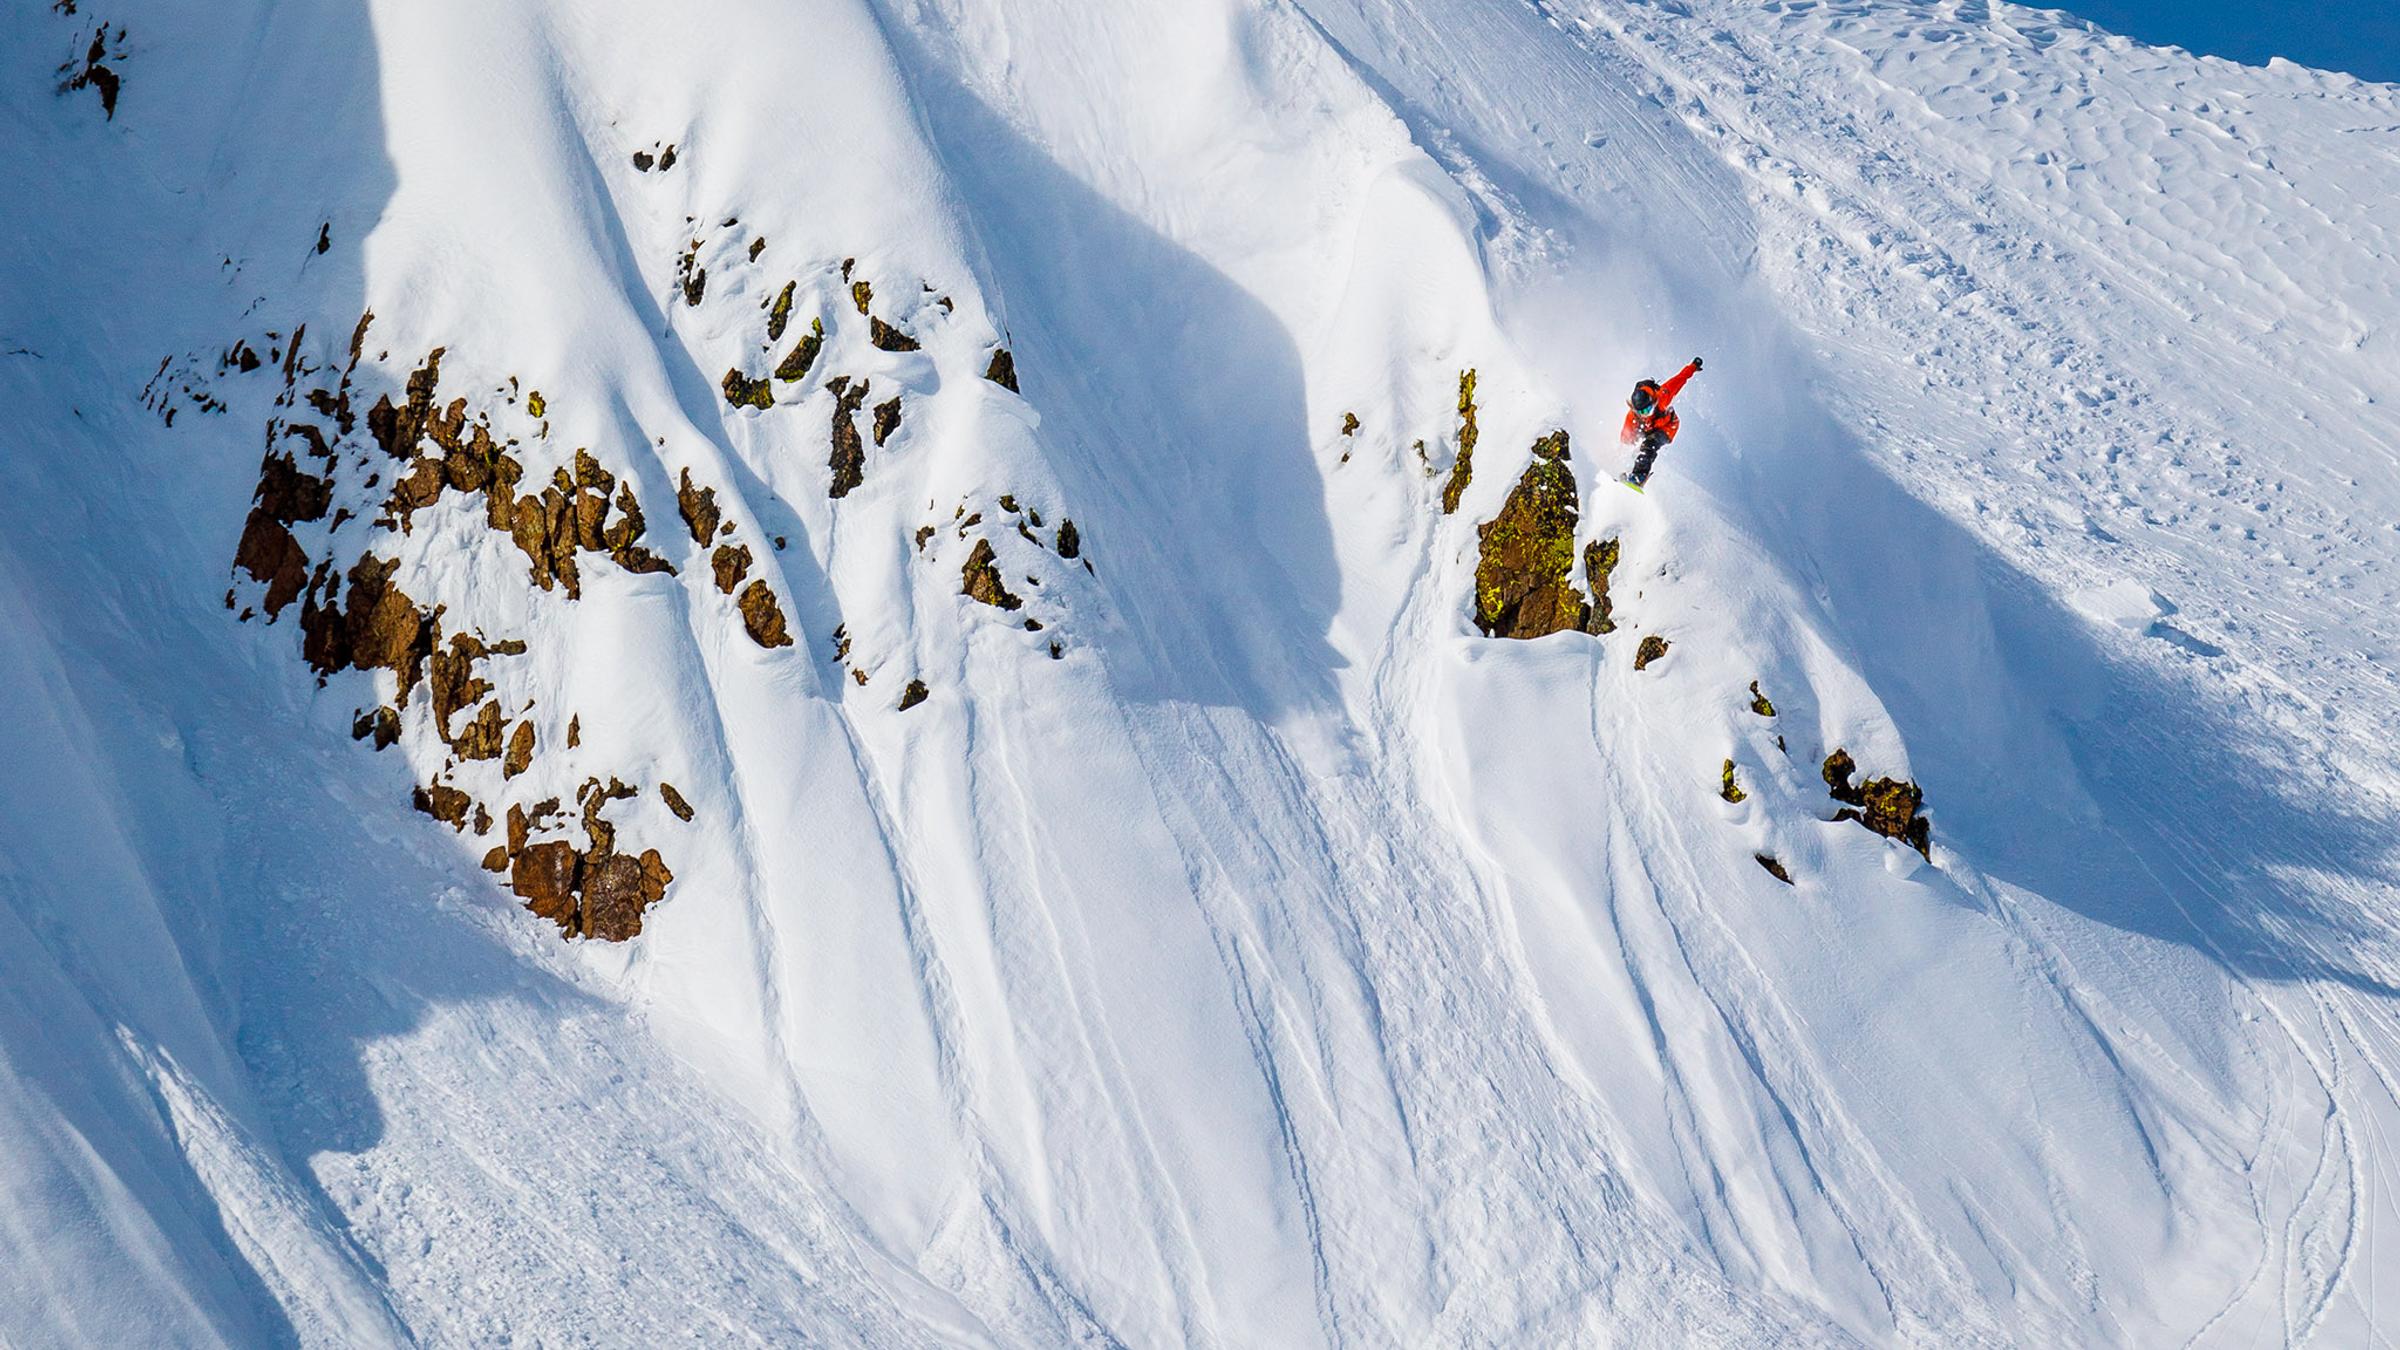 Tim Humphreys snowboarding & airing a cliff into powder at Apine Meadows